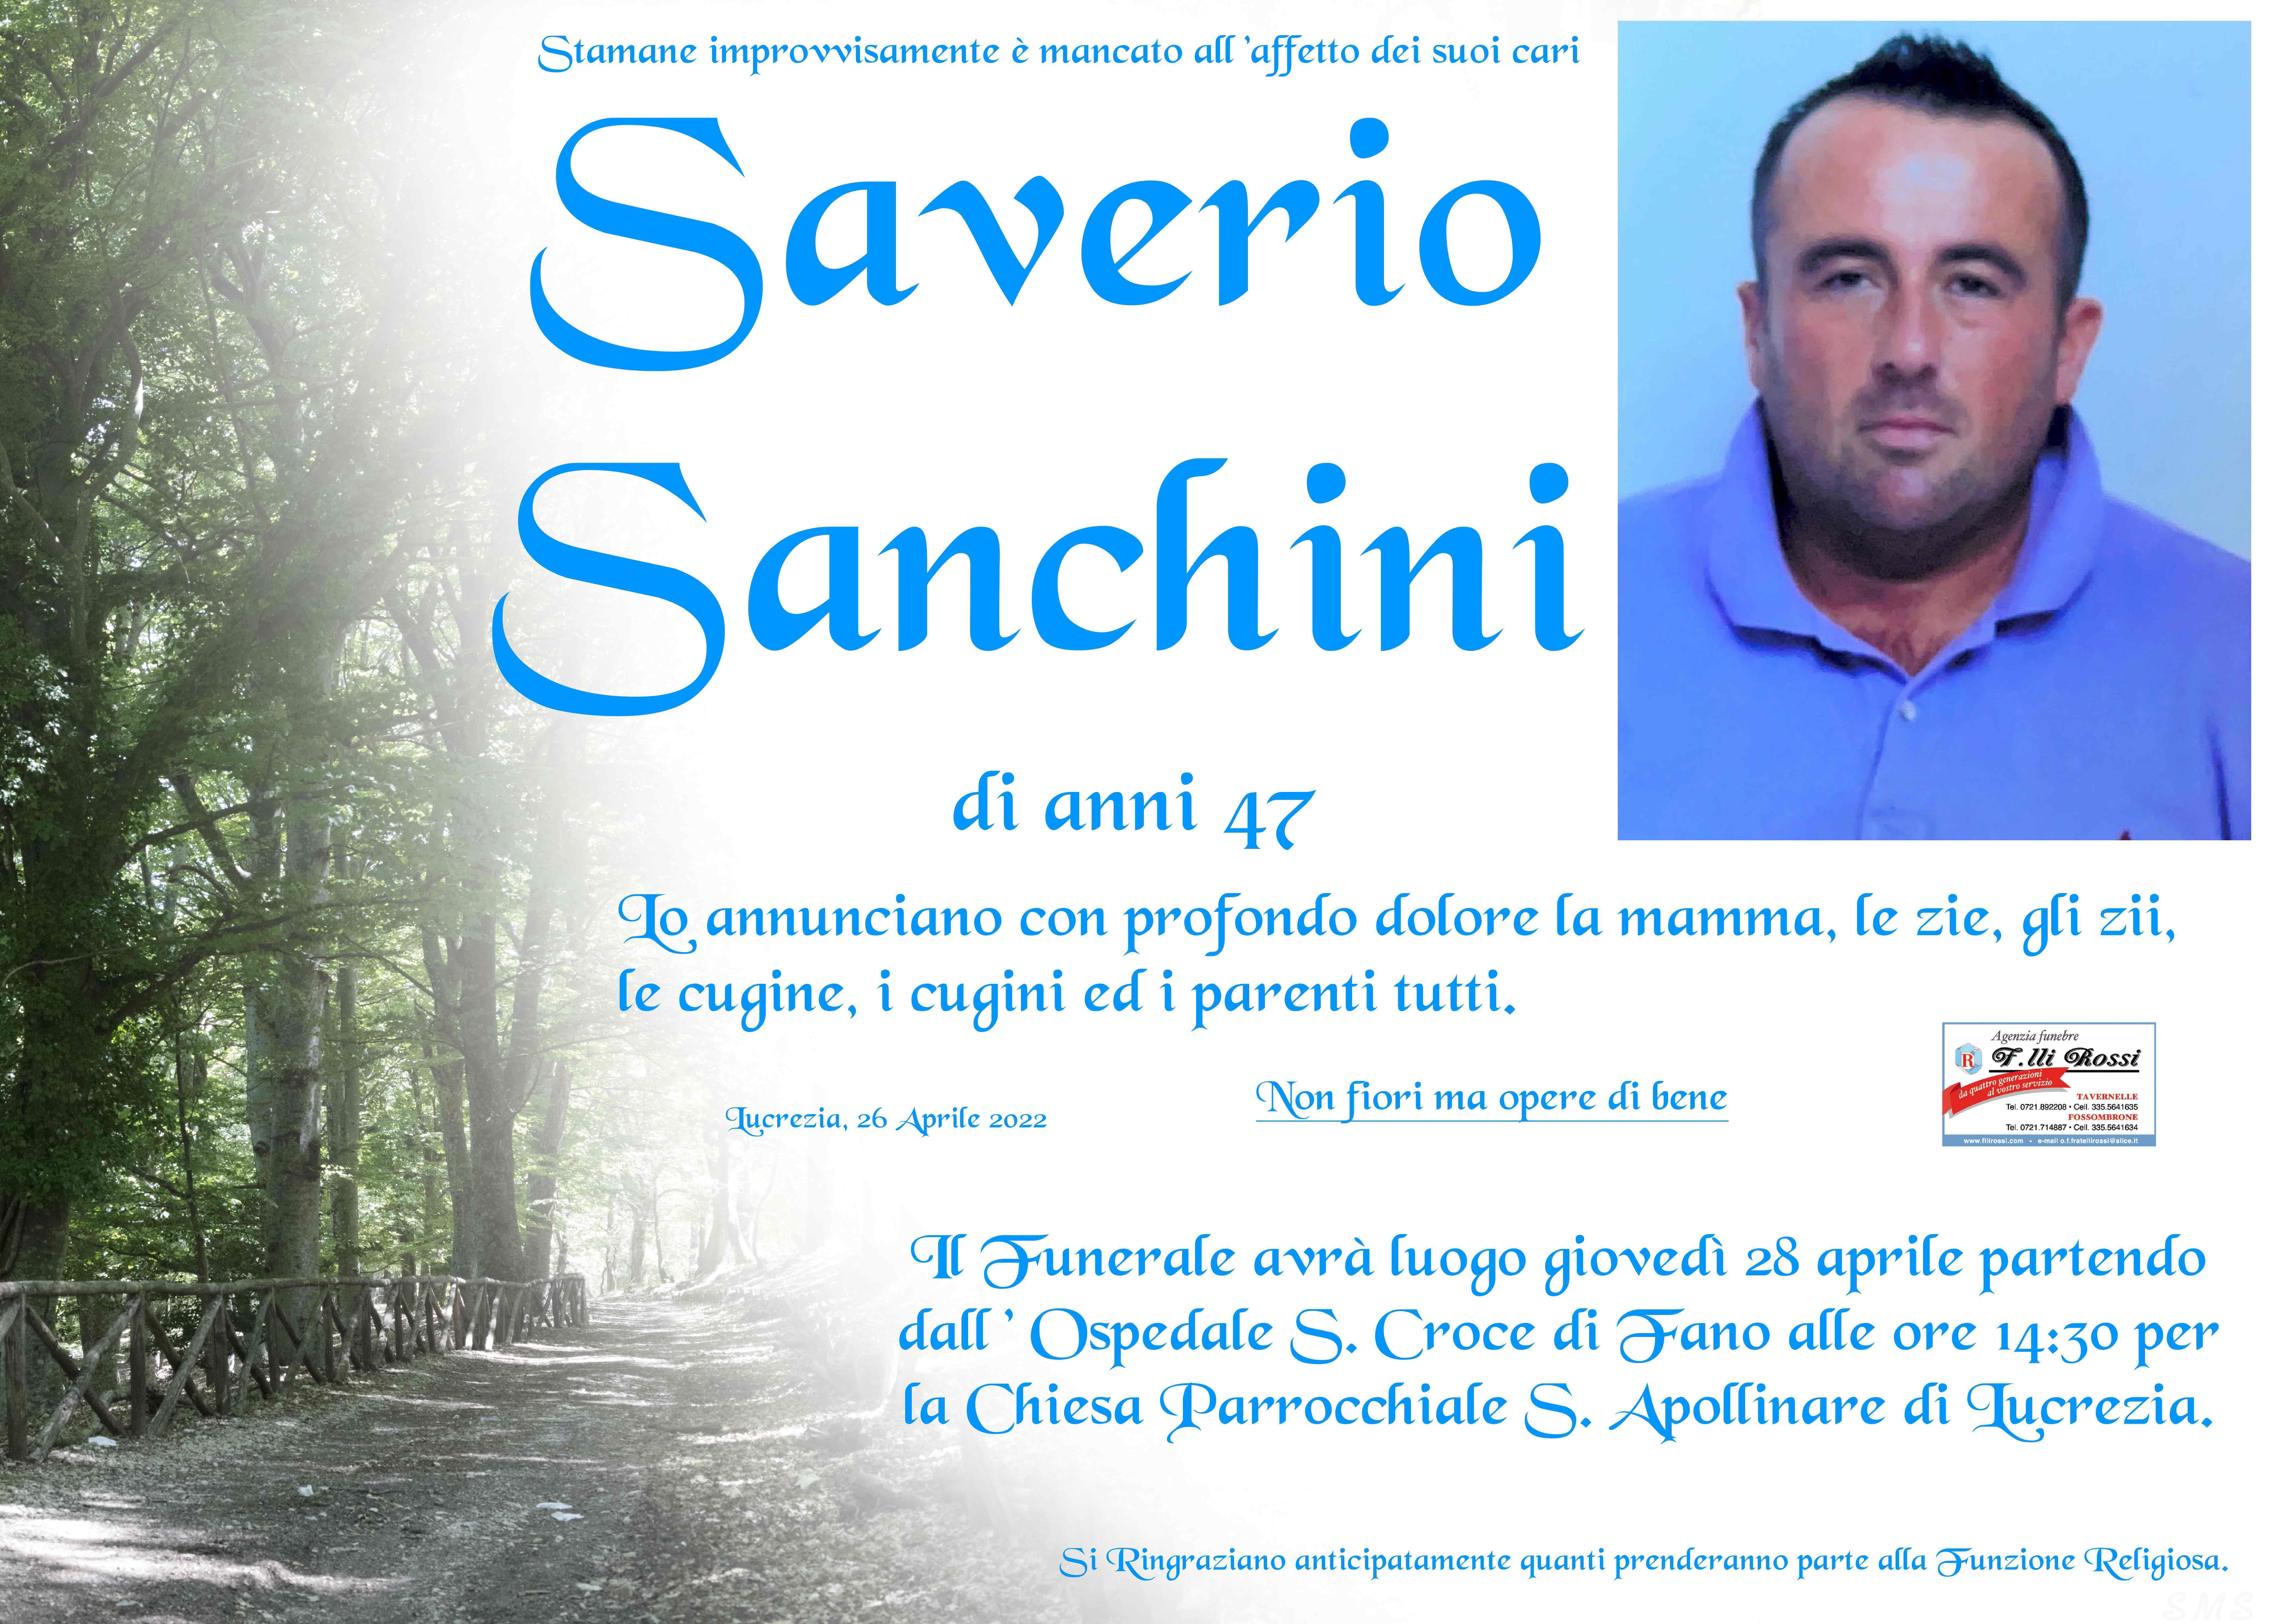 Saverio Sanchini